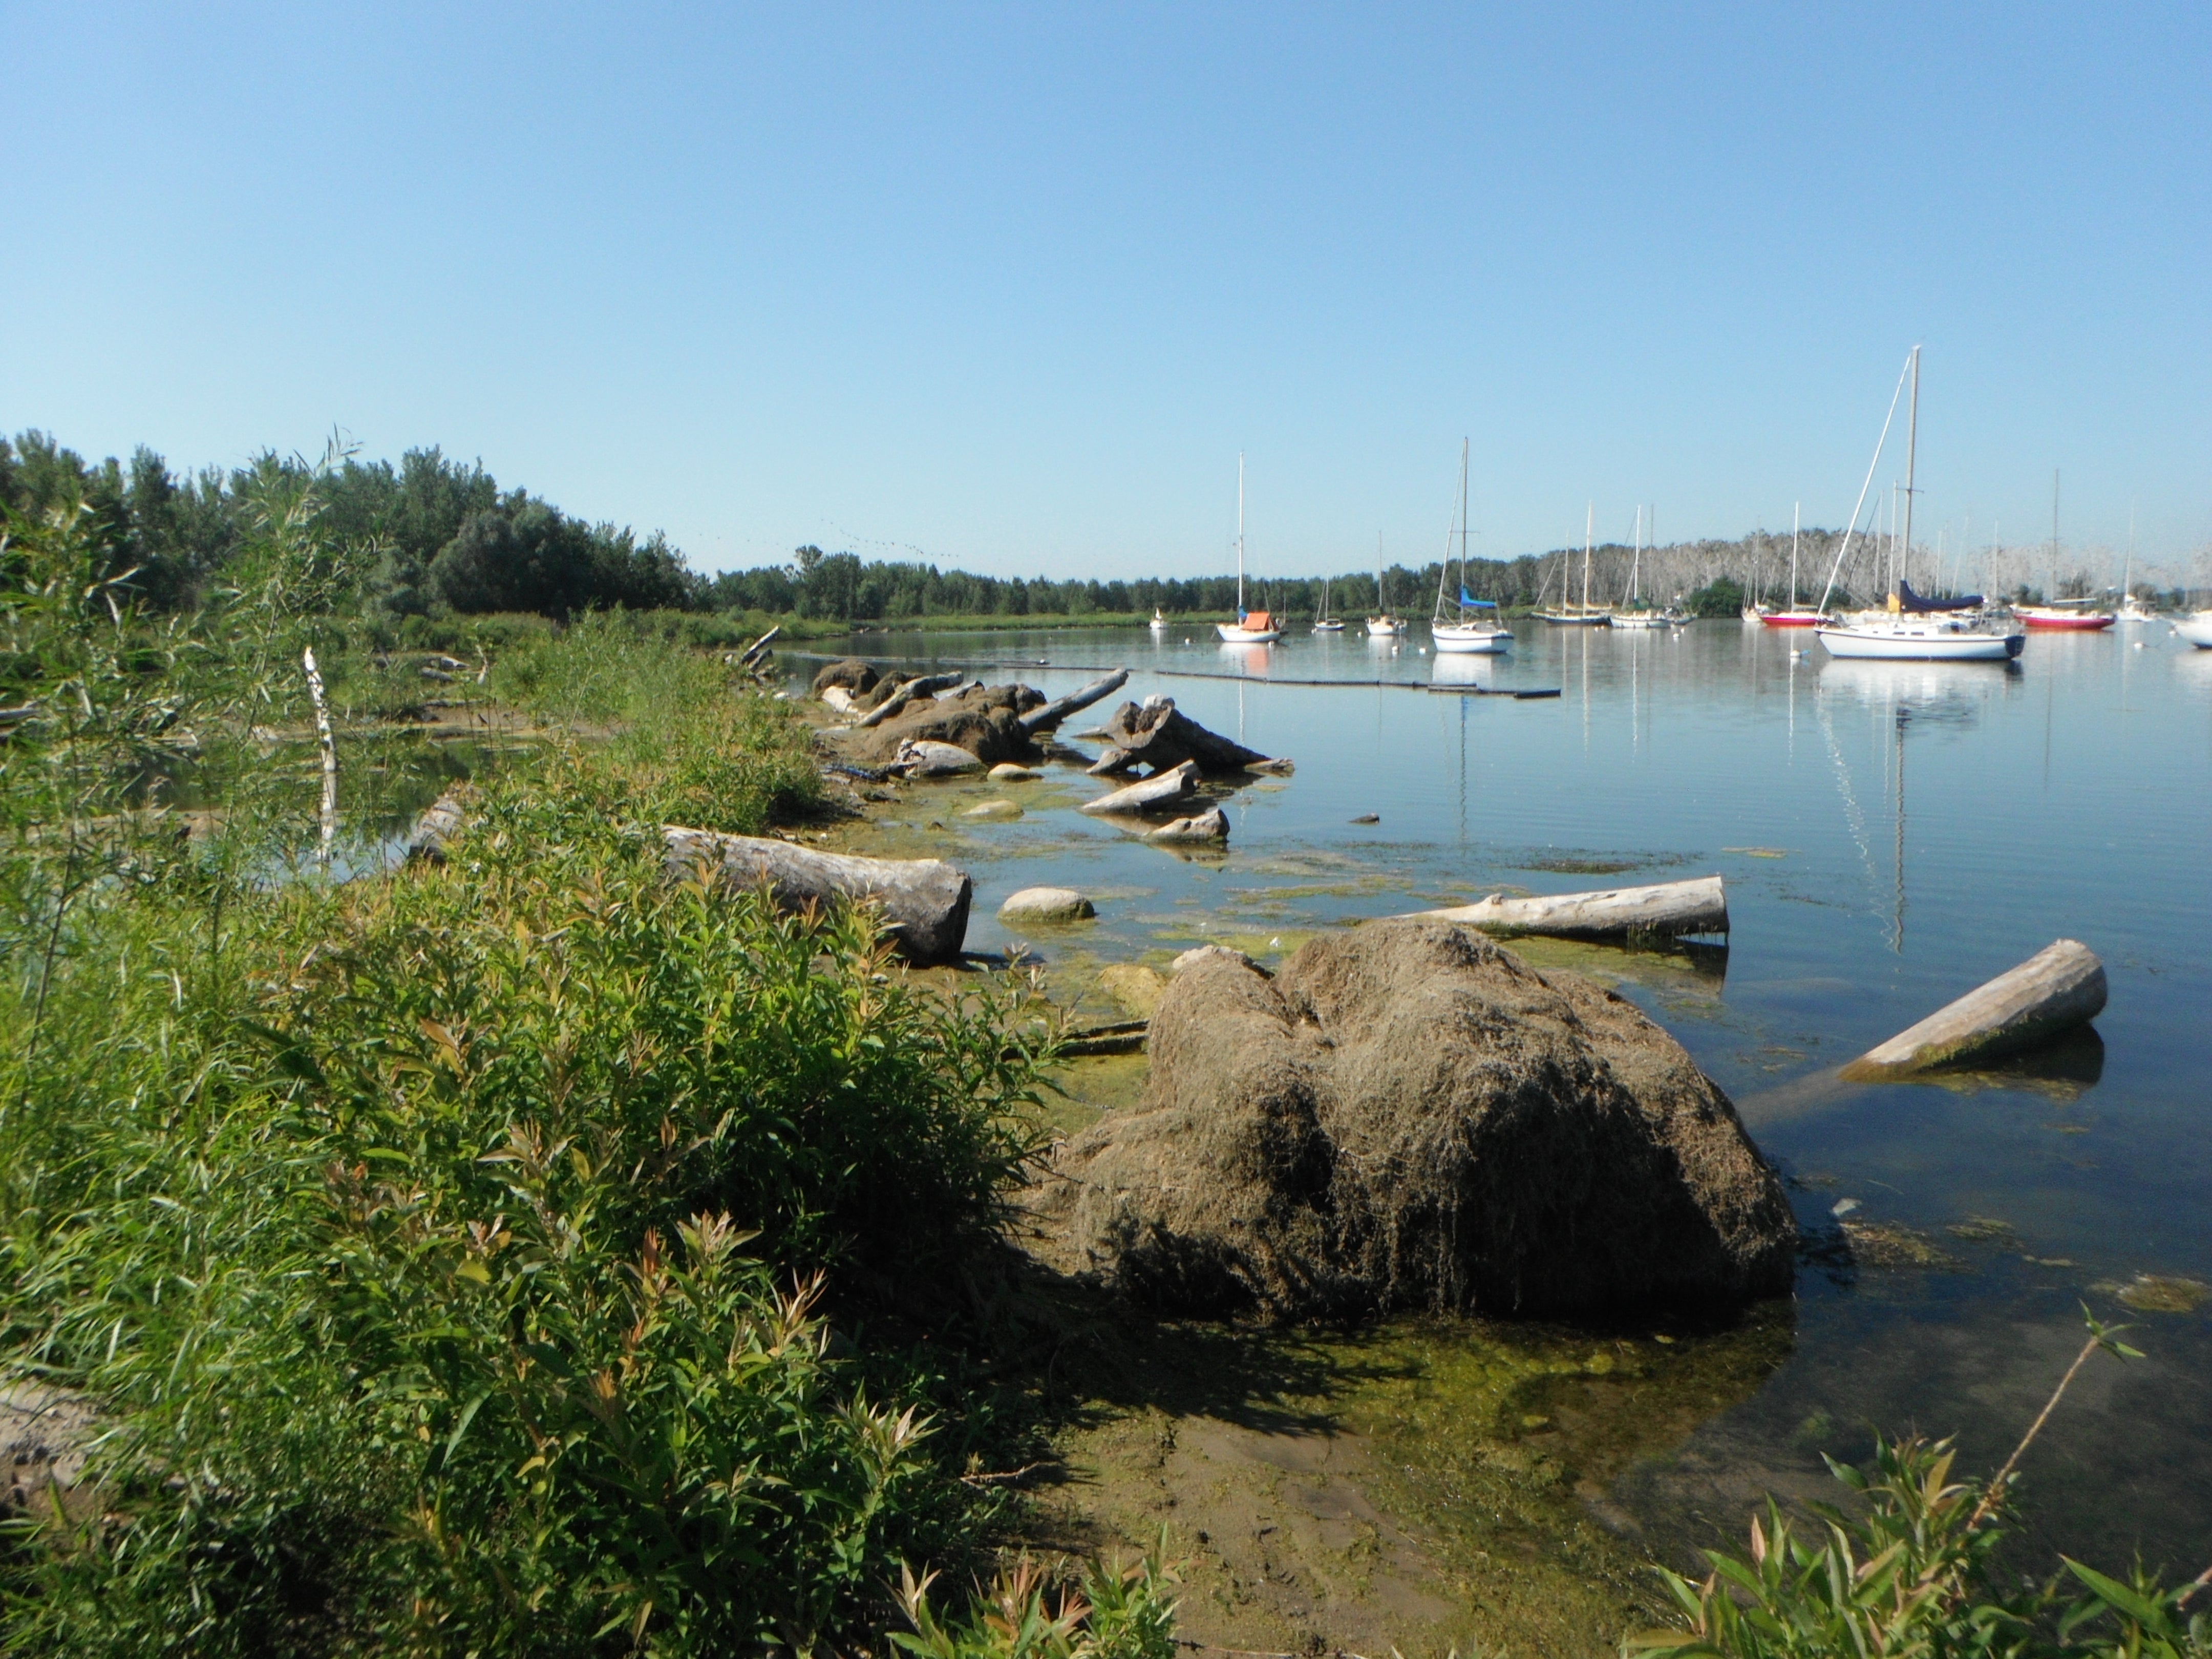 Wetland and aquatic habitat flourish on Tommy Thompson Park’s boat-lined shores.